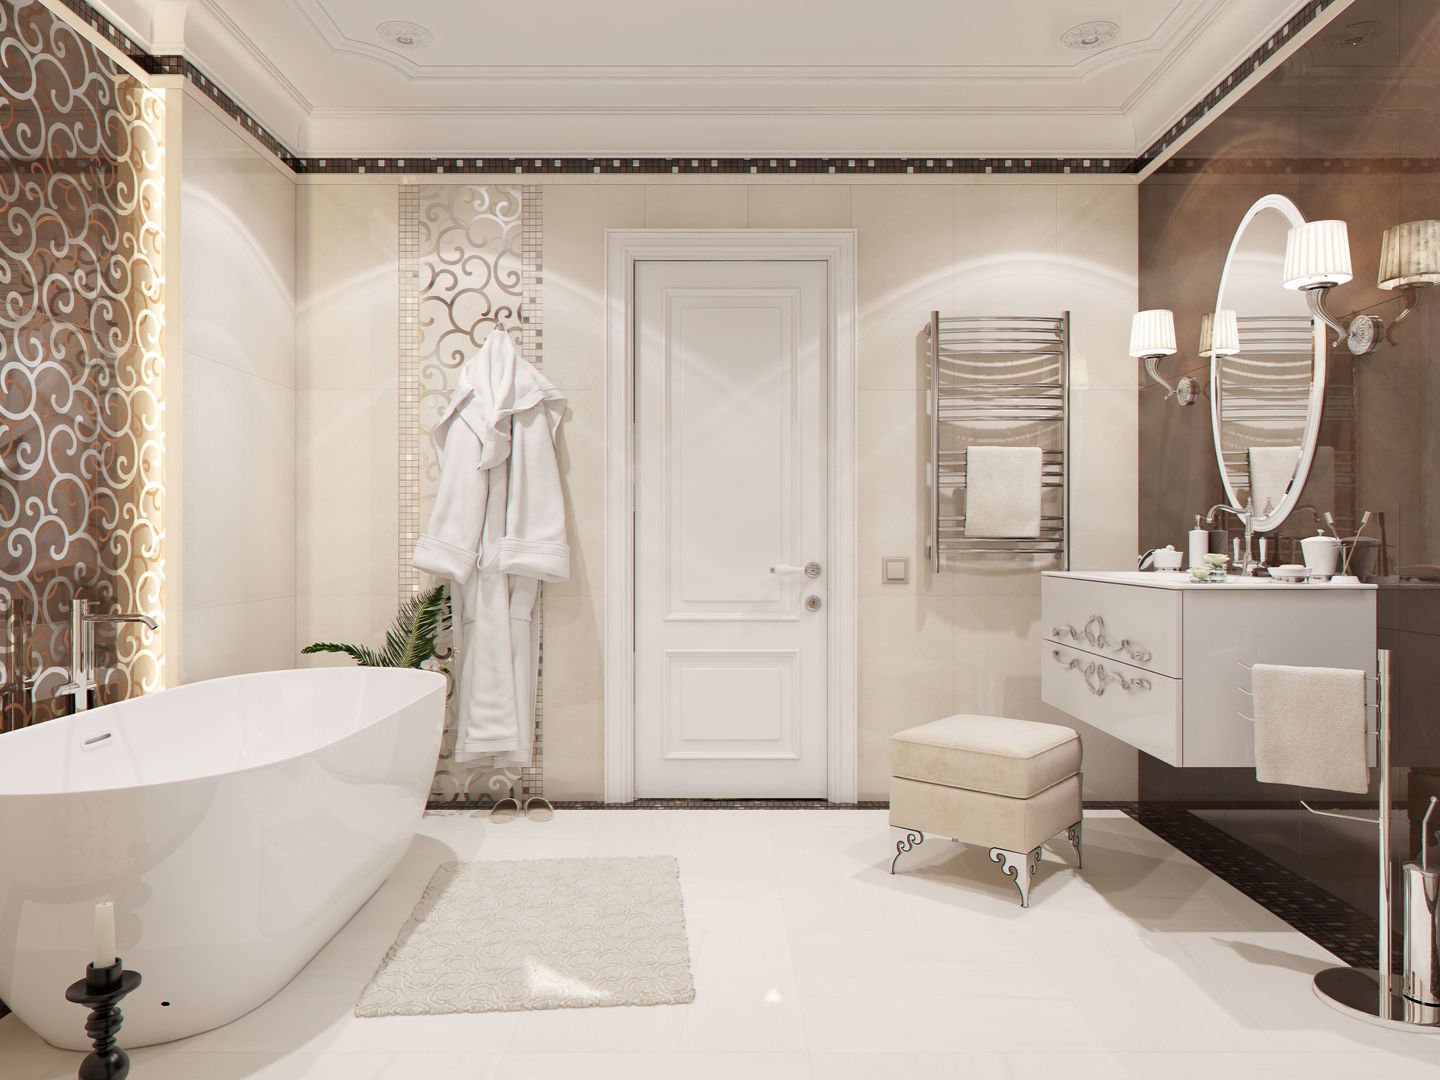 Ванная комната "Magnifique", Студия дизайна Дарьи Одарюк Студия дизайна Дарьи Одарюк حمام